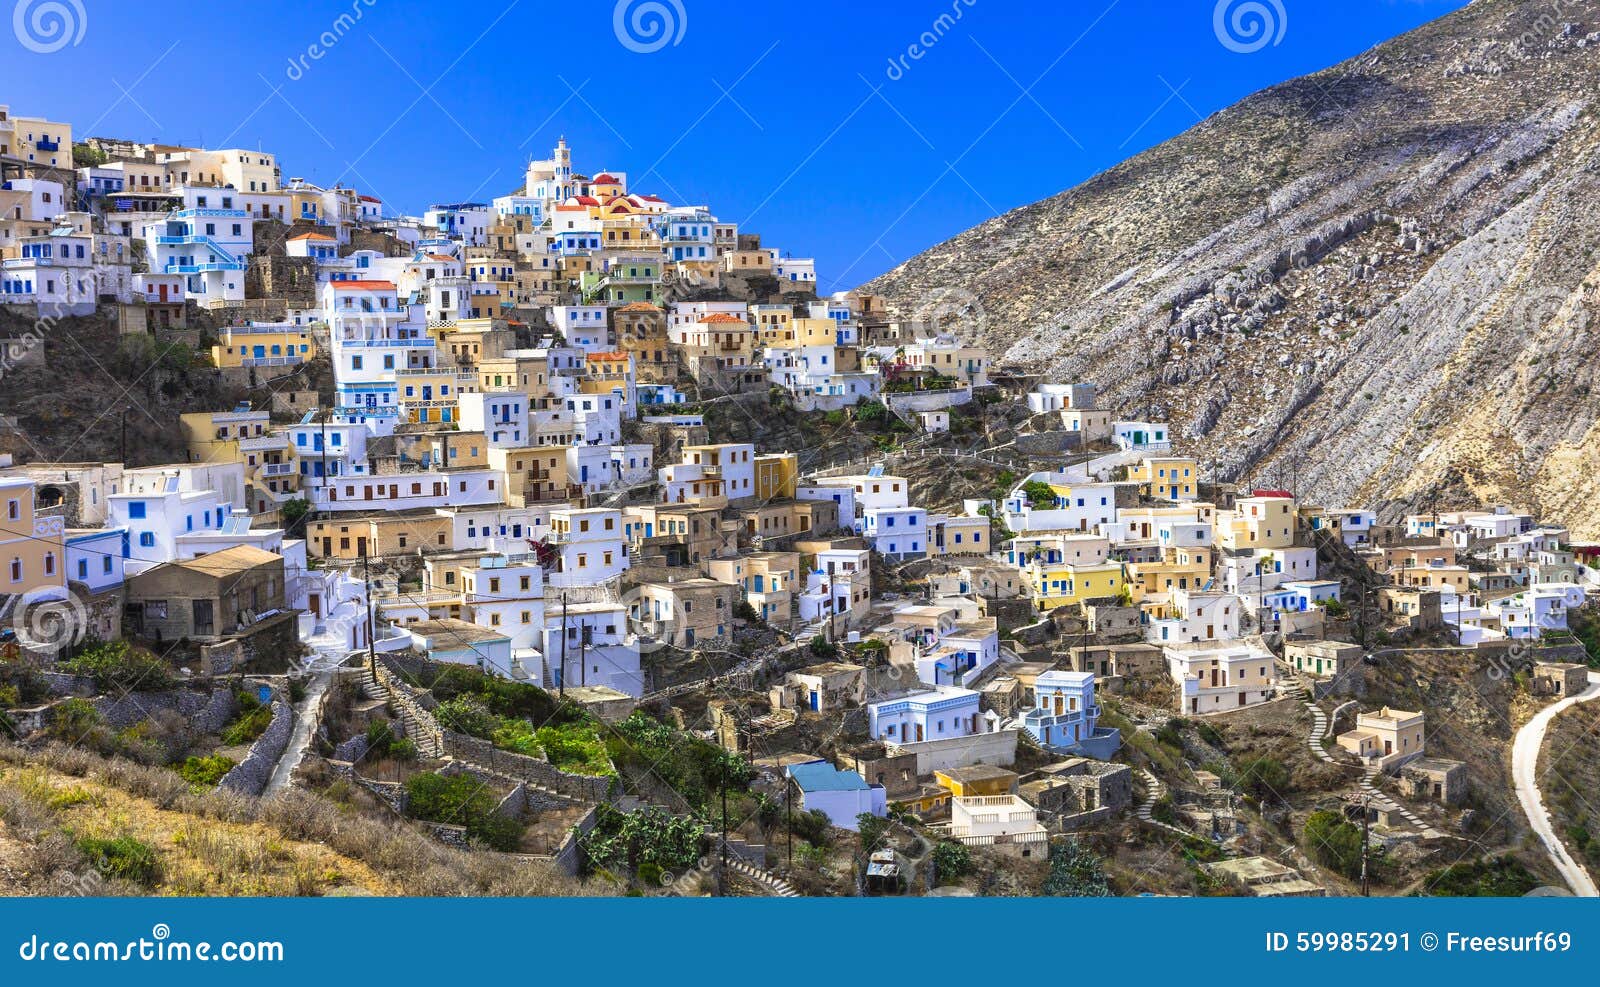 beautiful villages of greece - olimbos in karpathos